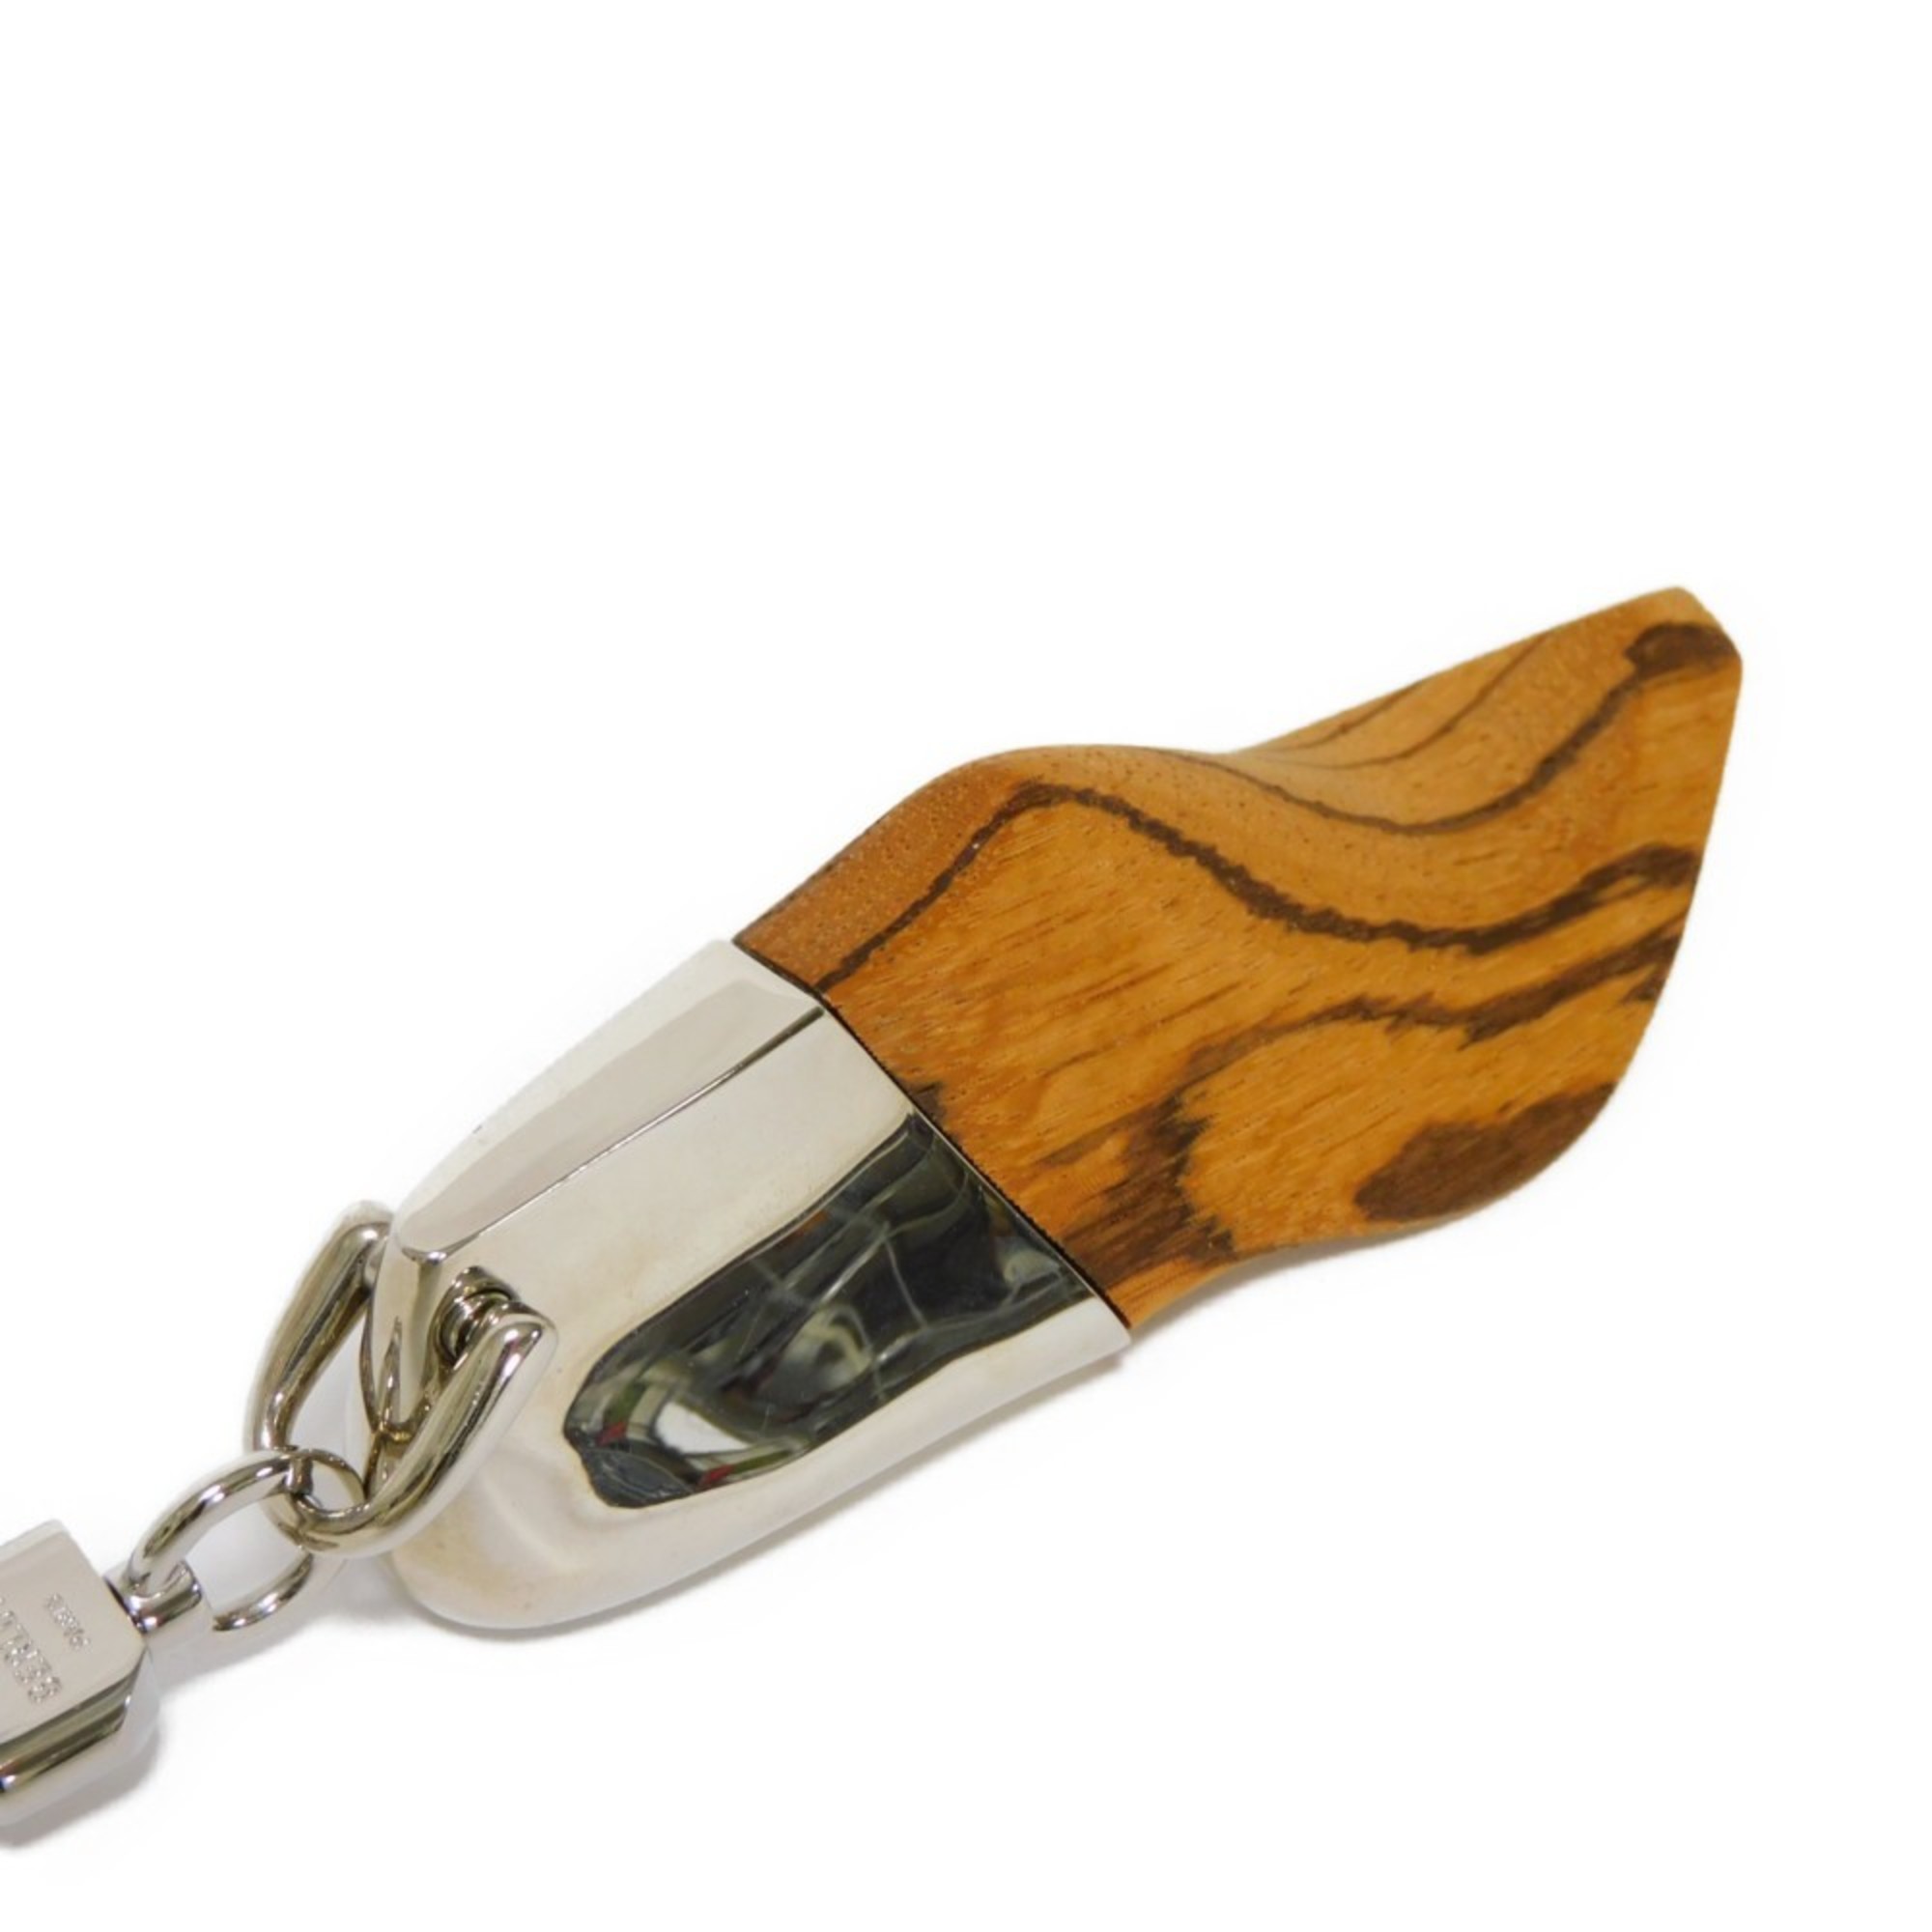 Berluti Keychain Shoekeeper Shoe Tree Keyring Bag Charm Silver Wood Natural Men's